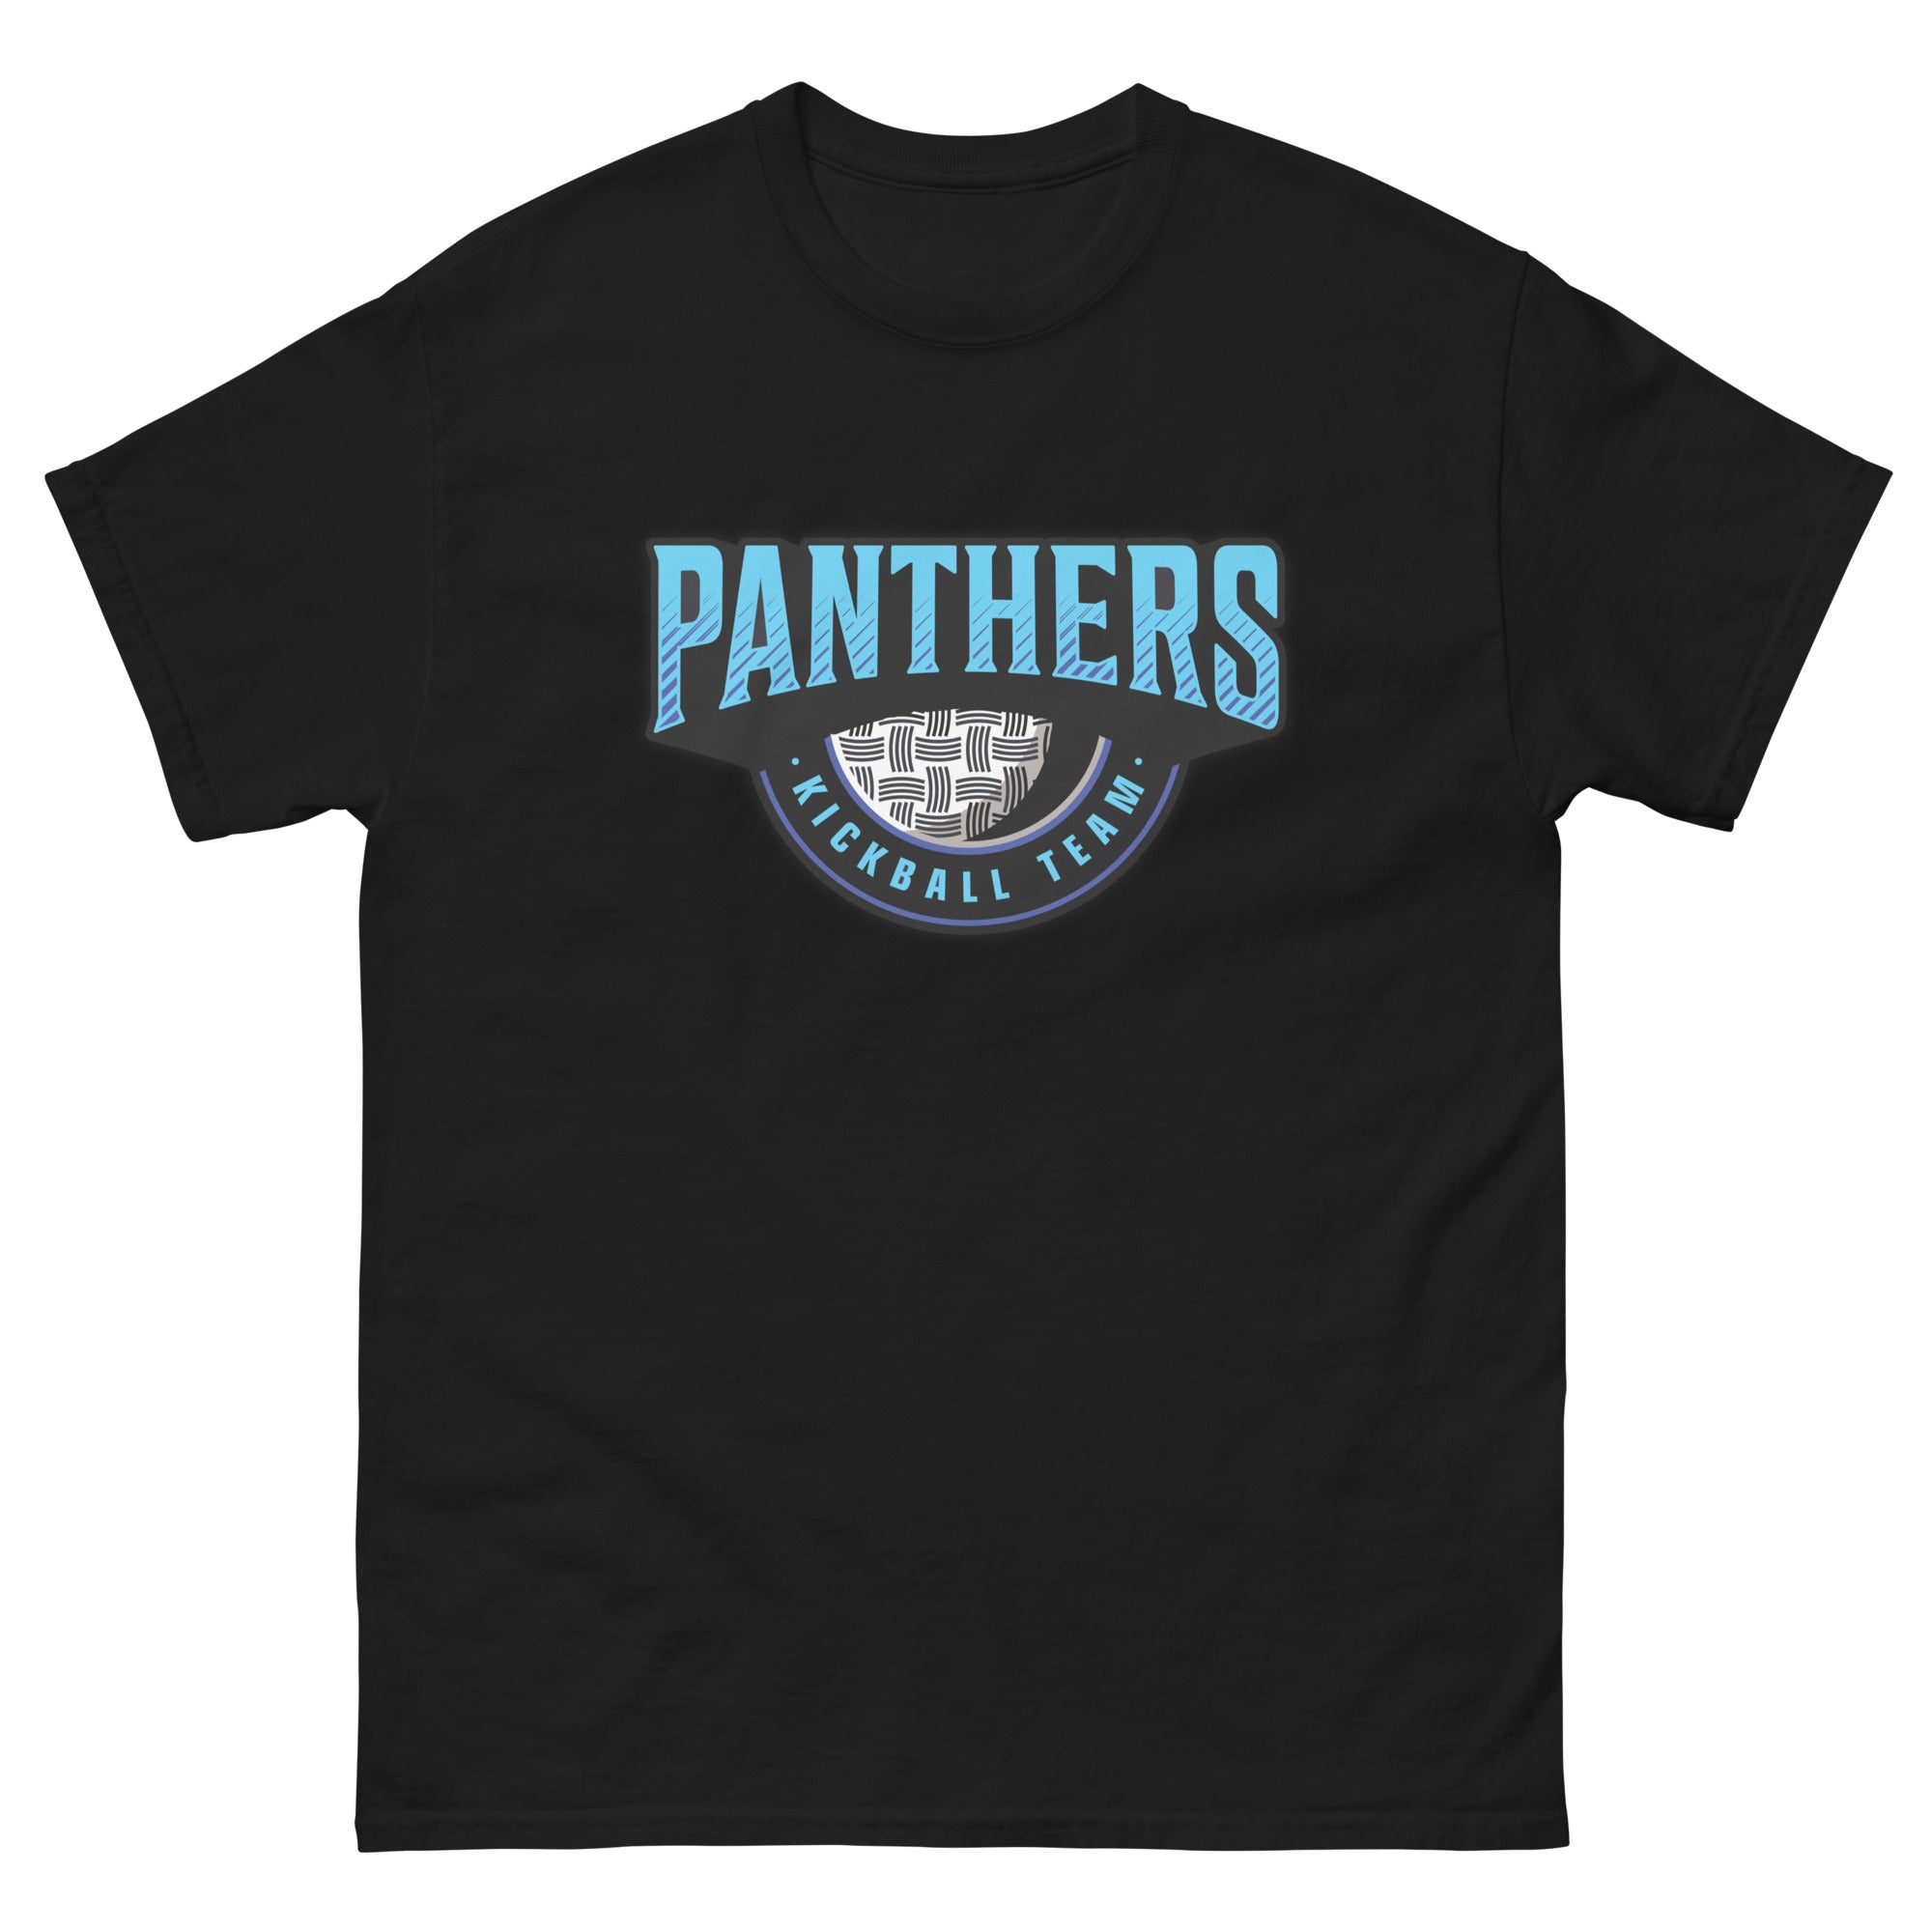 Panthers Cotton Shirt